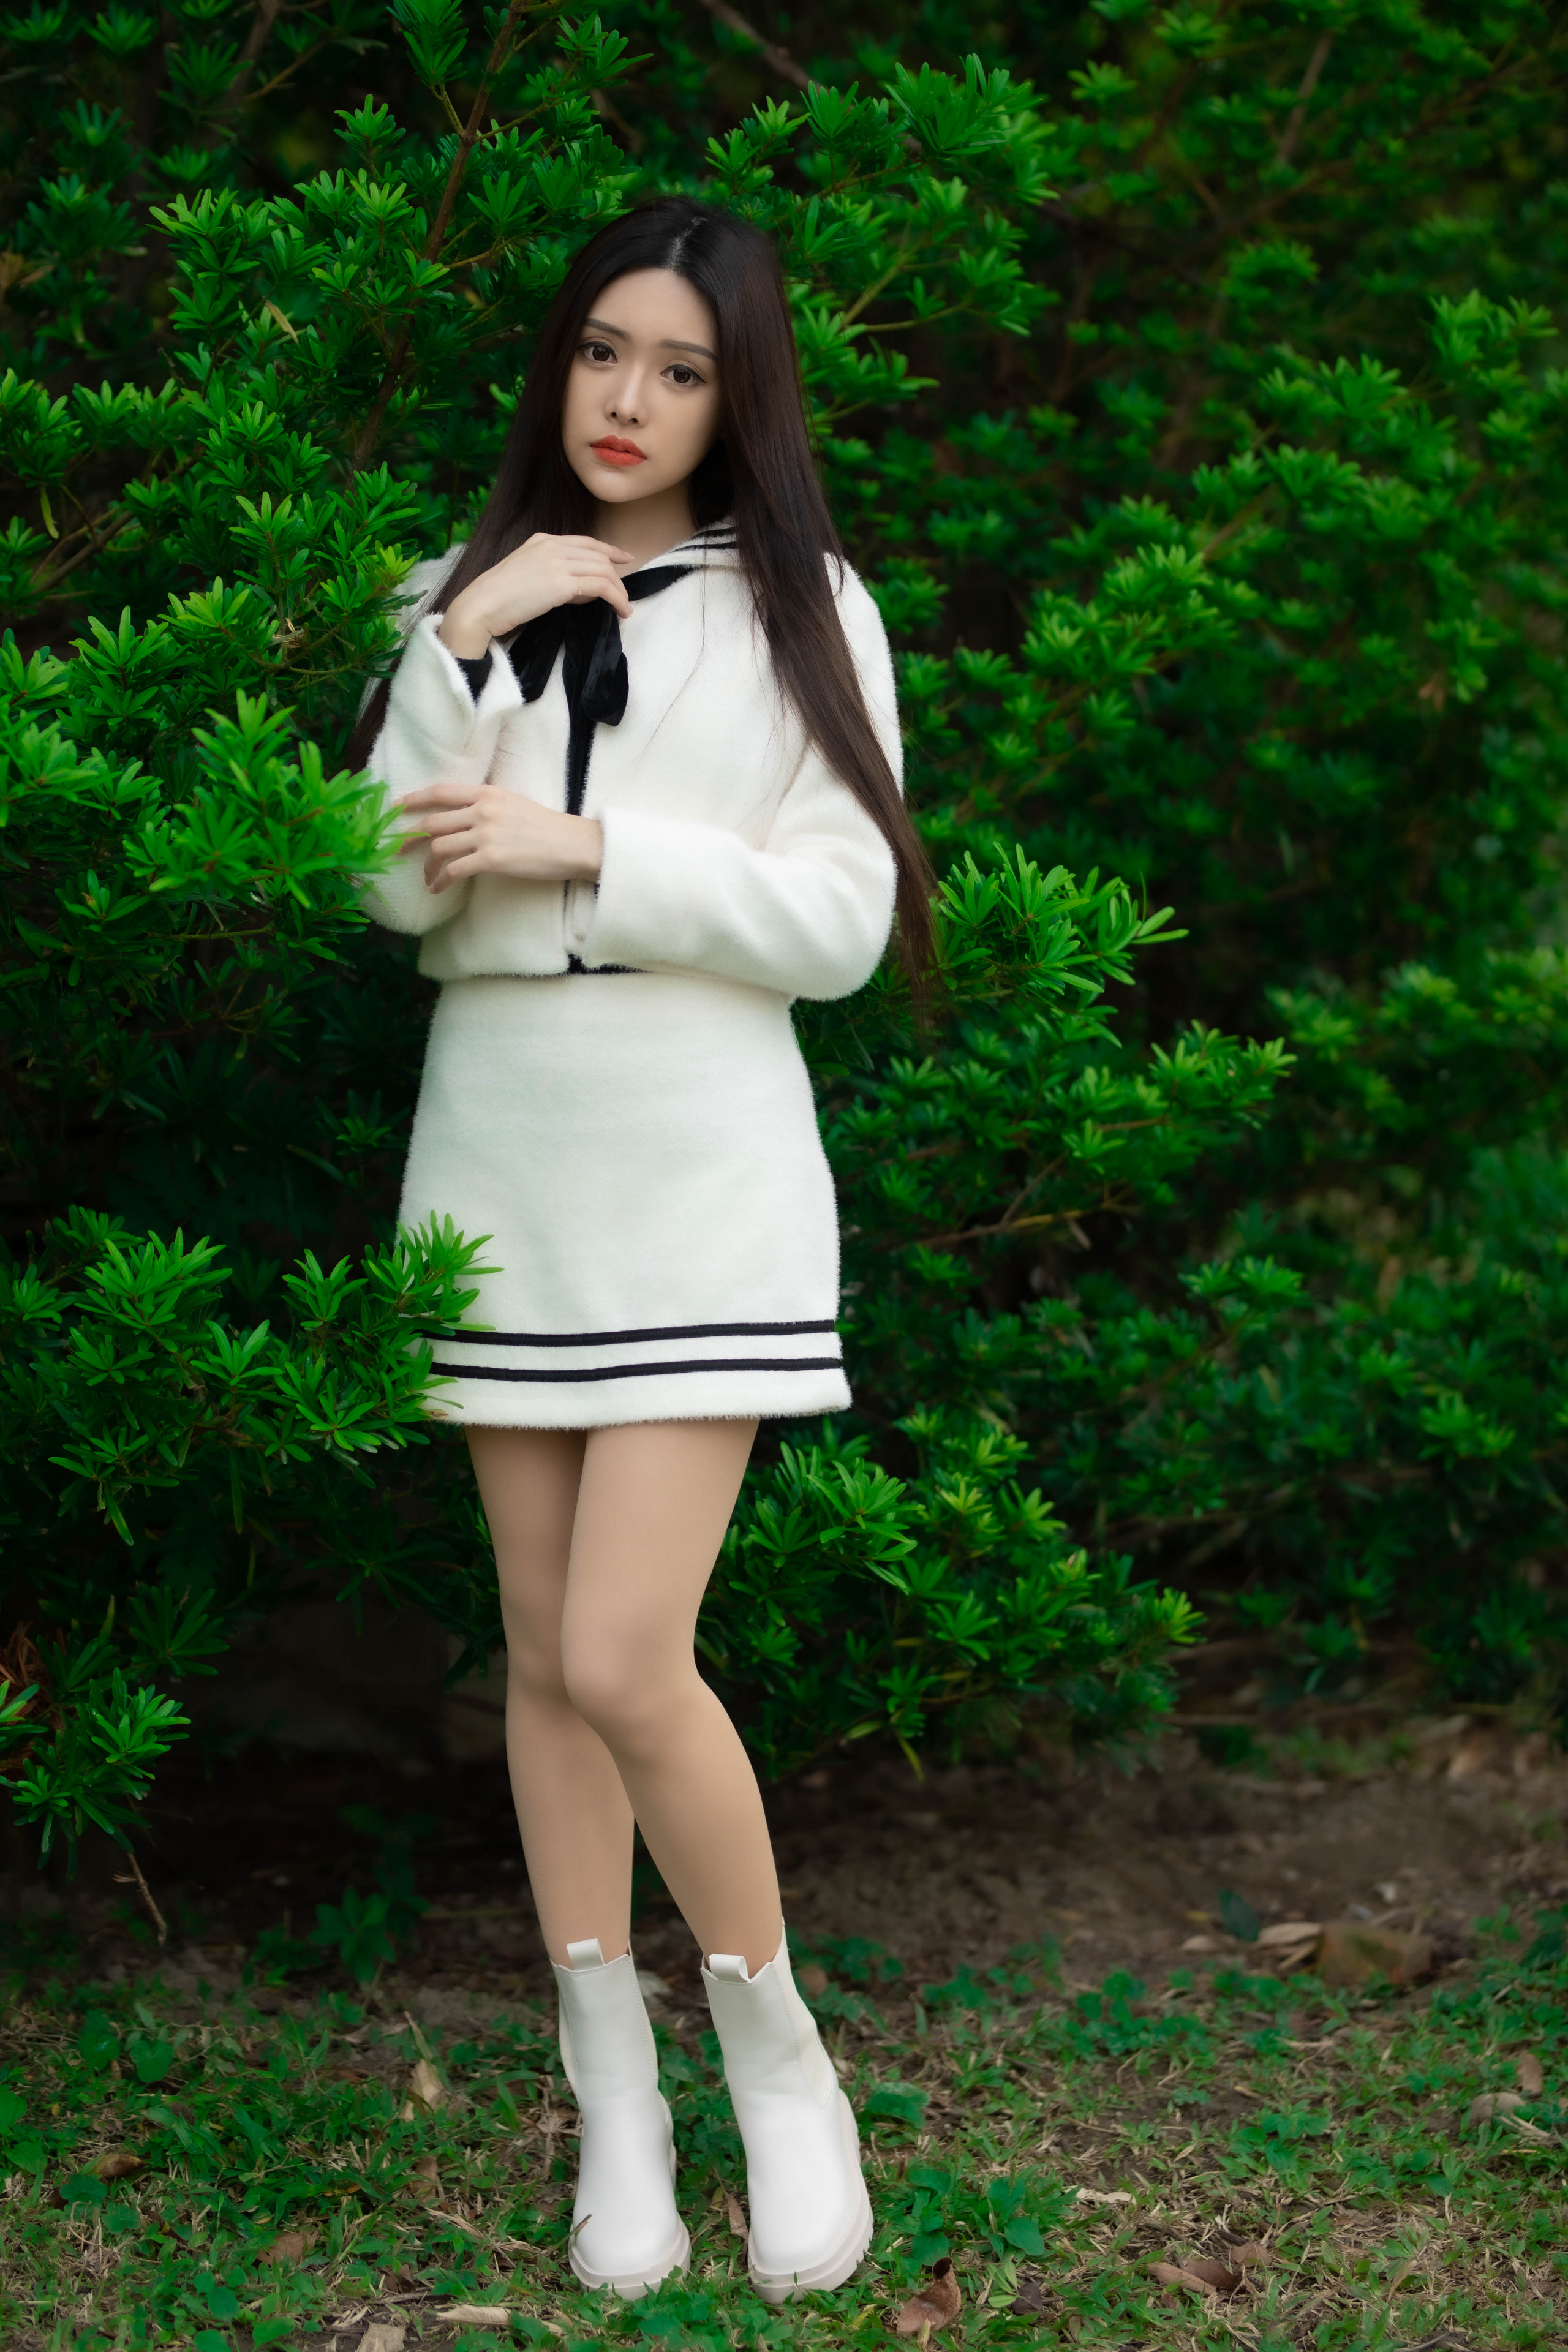 Asian Model Women Long Hair Dark Hair Bushes Skirt Jacket Shirt Ankle Boots Grass Trees 2560x3840